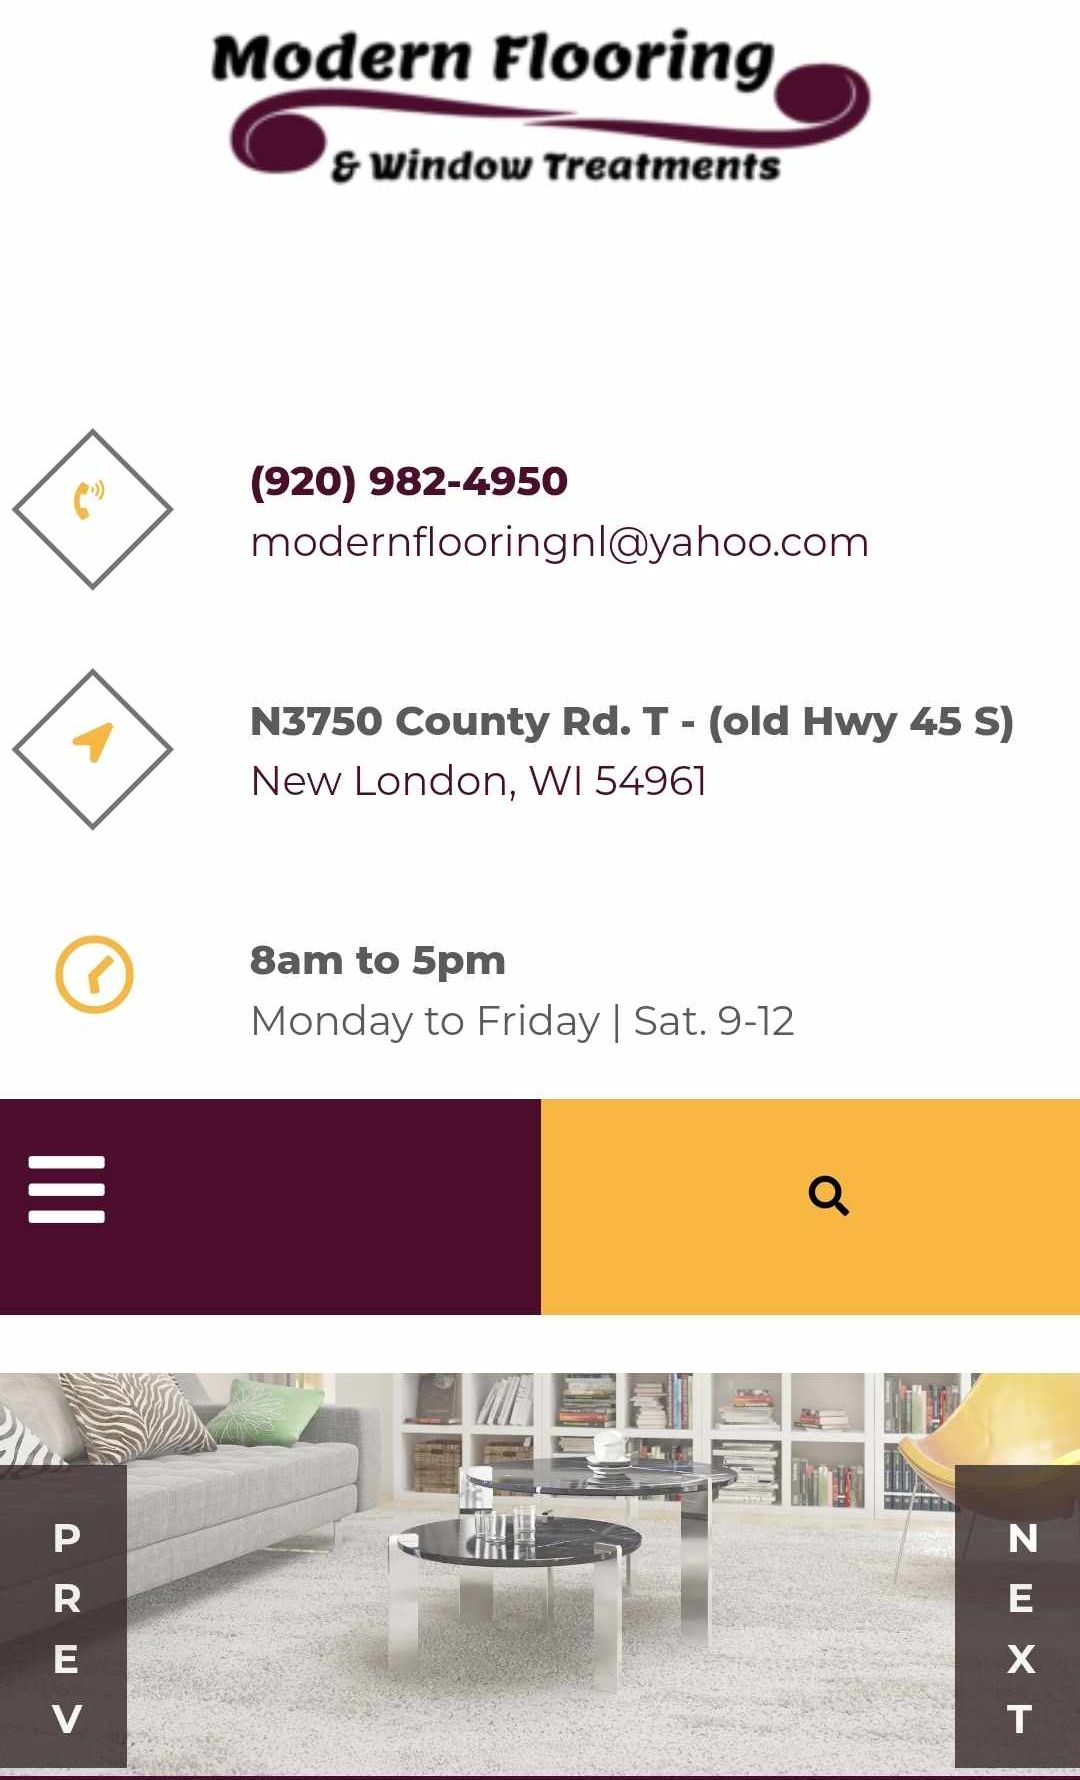 Modern Flooring website by Bastian Marketing